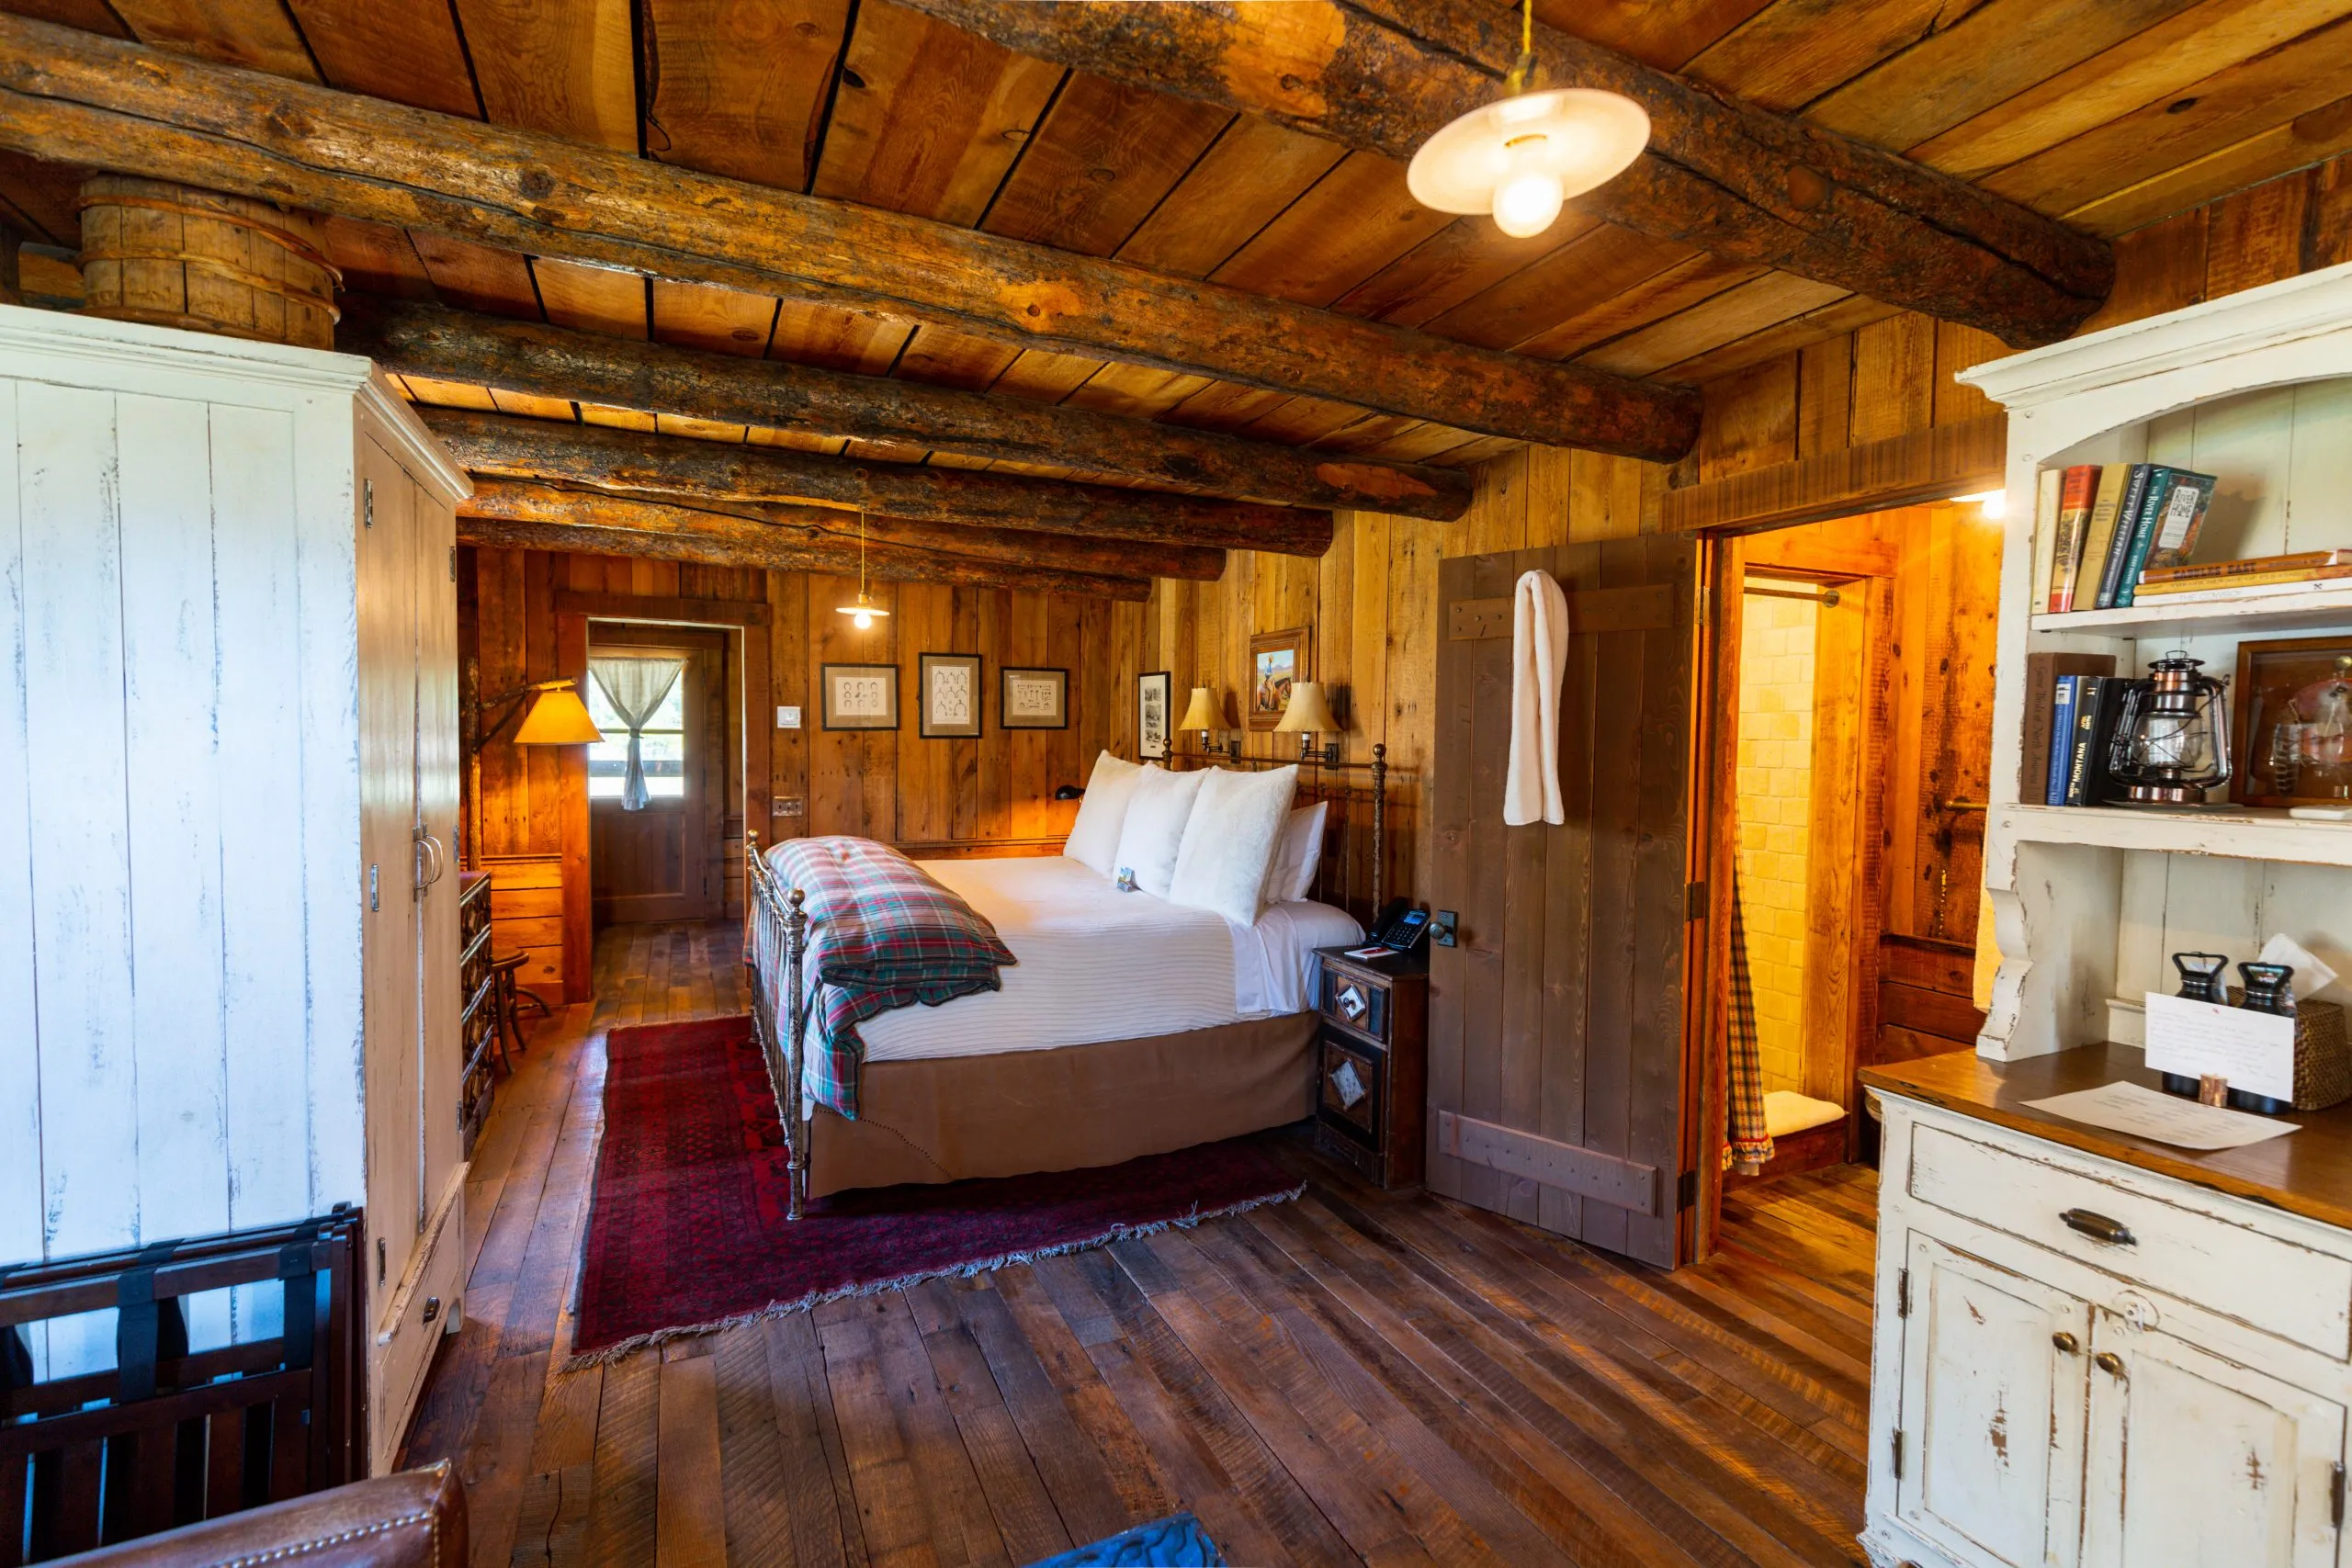 Cabin bedroom interior